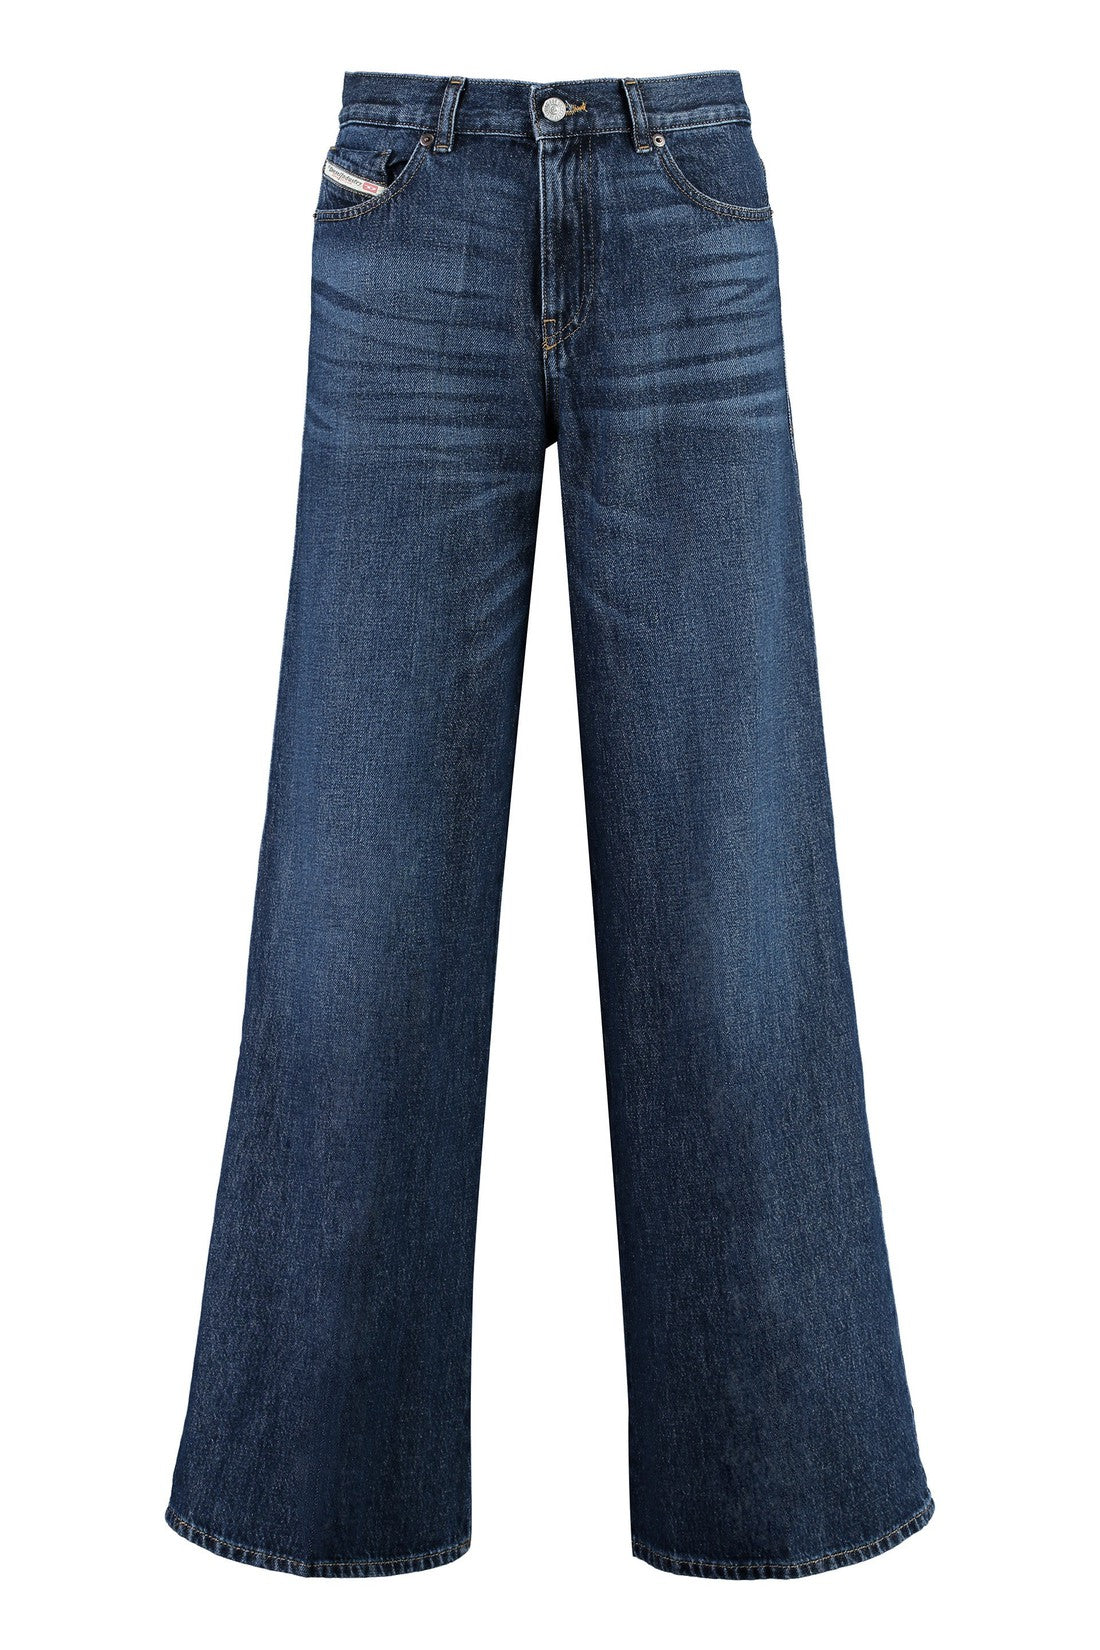 DIESEL-OUTLET-SALE-1978 D-Akemiflared jeans-ARCHIVIST